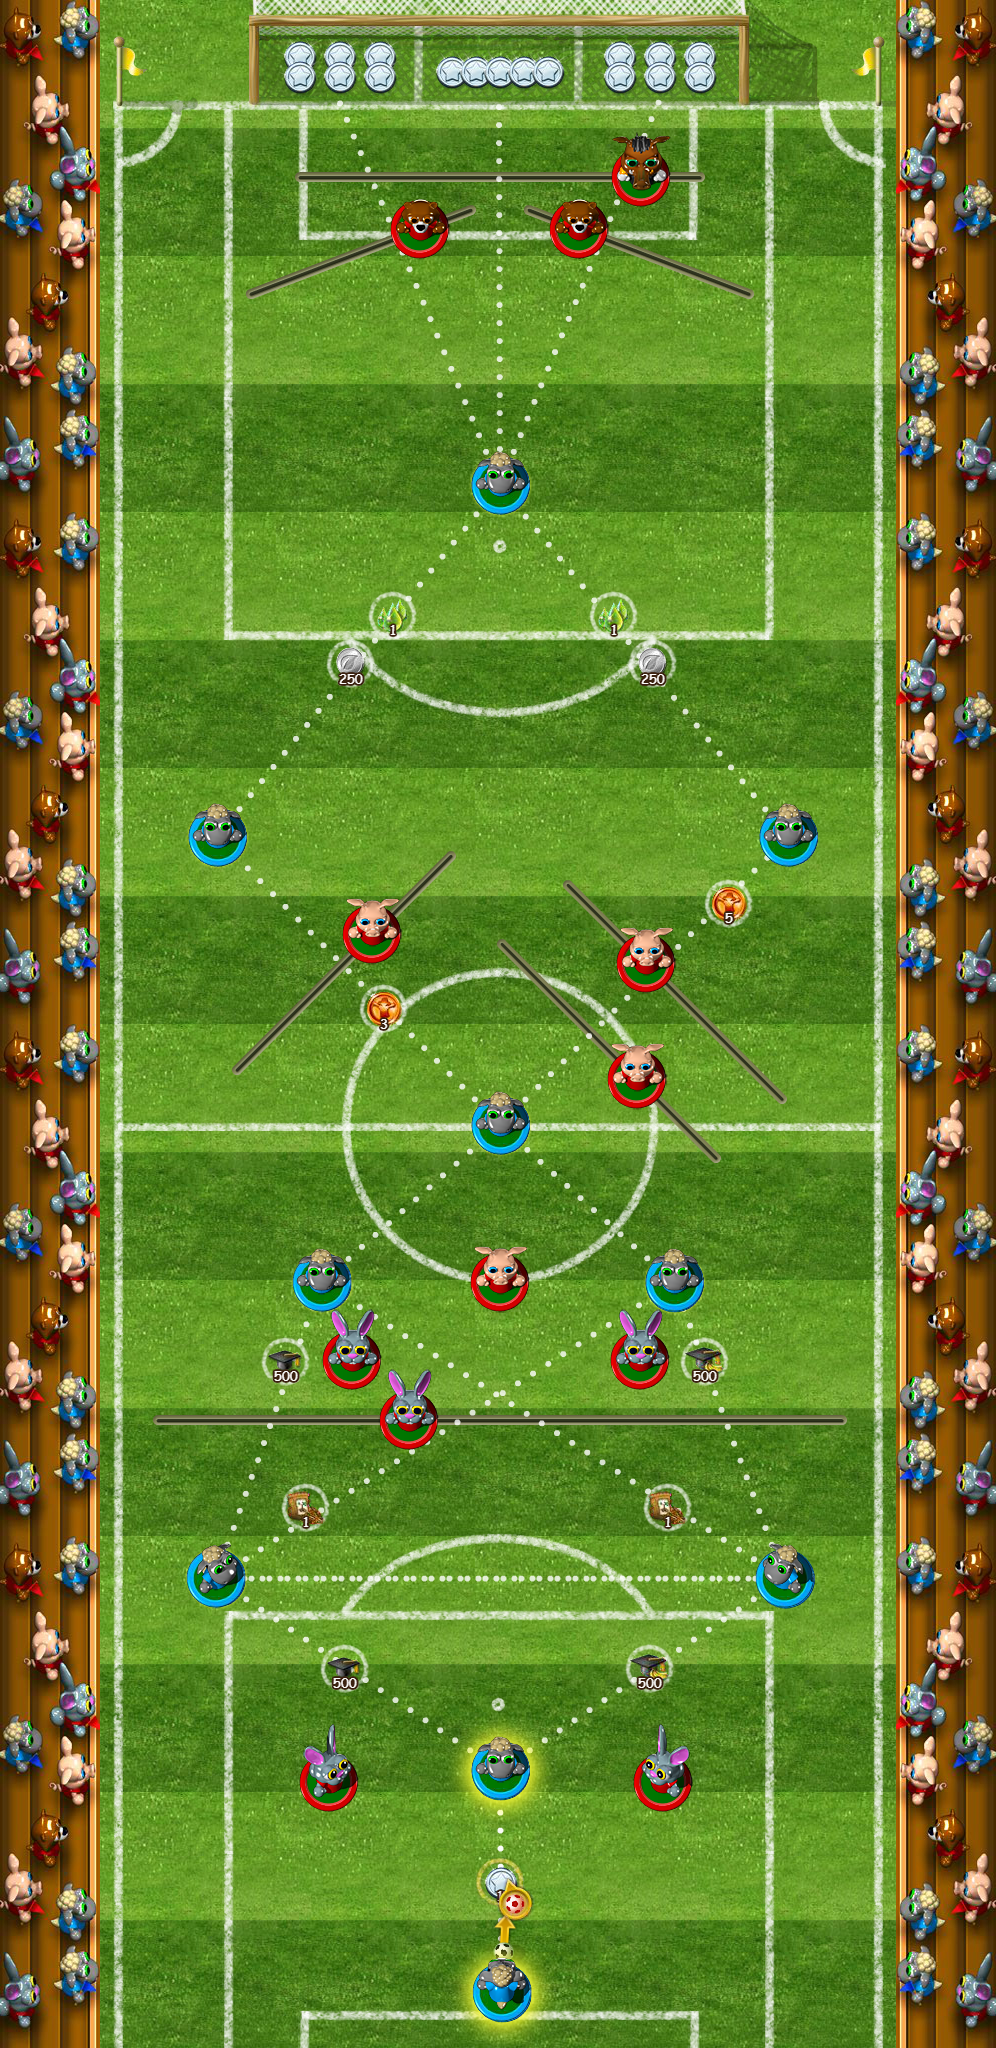 soccerjul2019_layout0.png